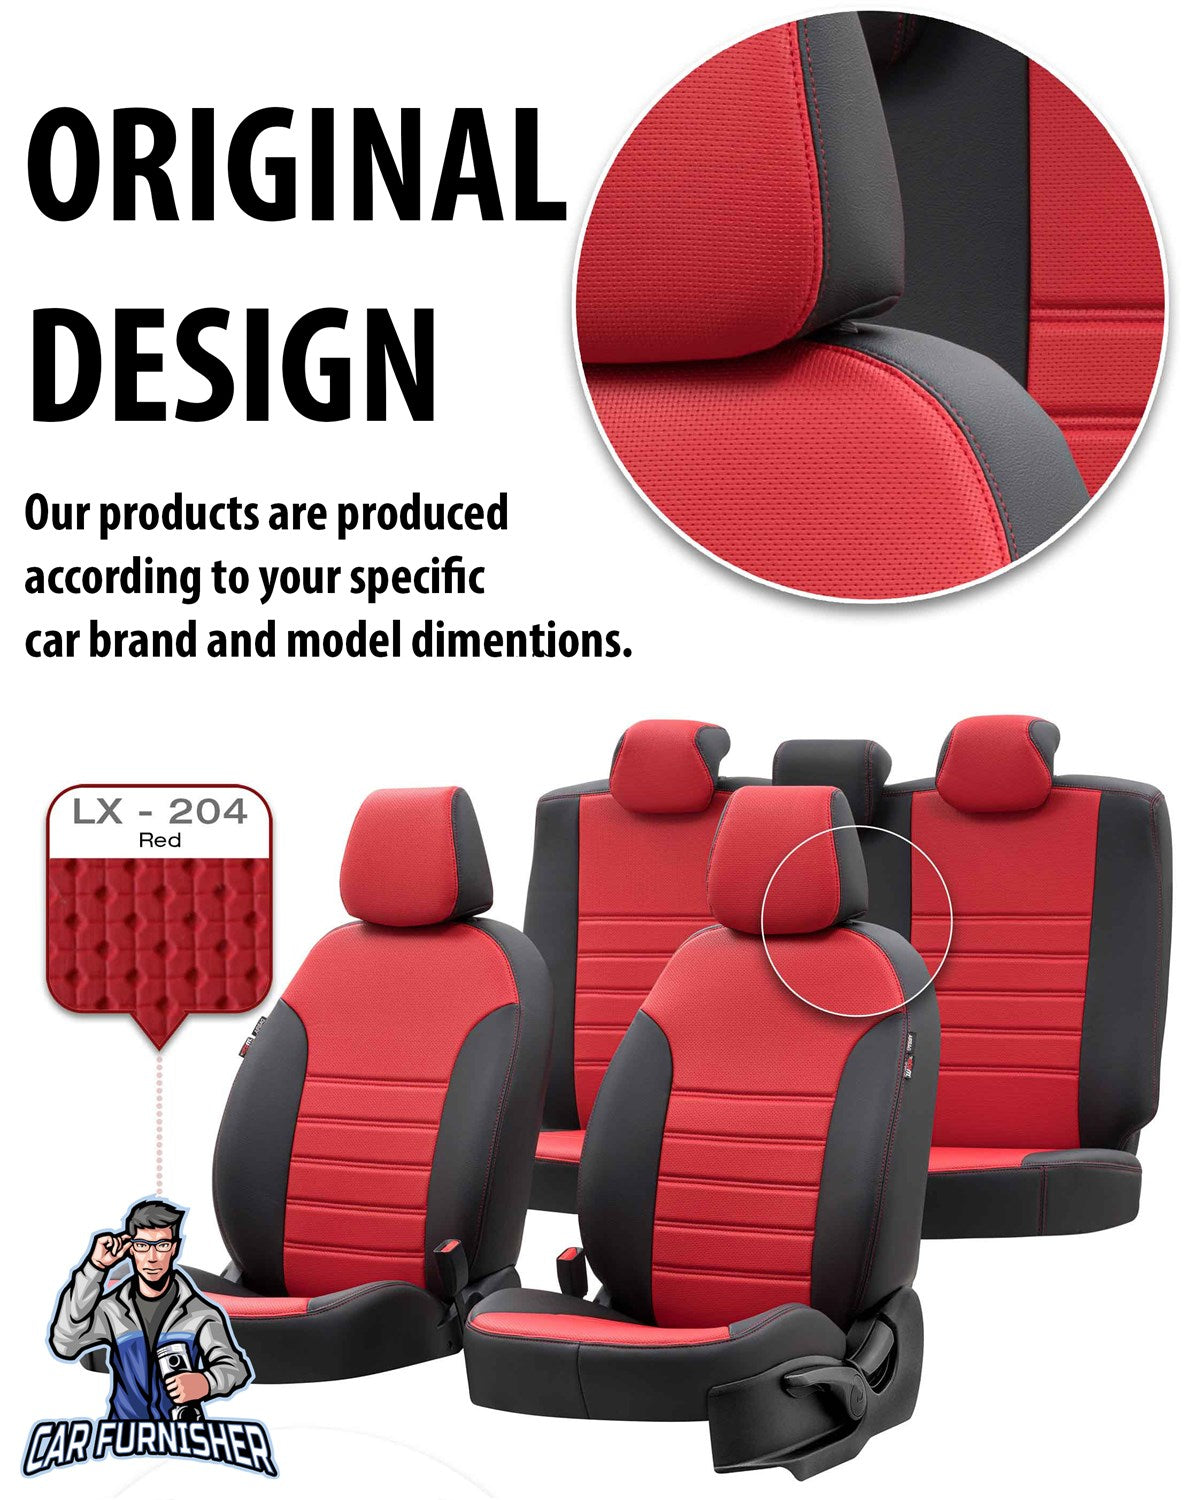 Alfa Romeo Giulietta Seat Cover New York Leather Design Black Leather